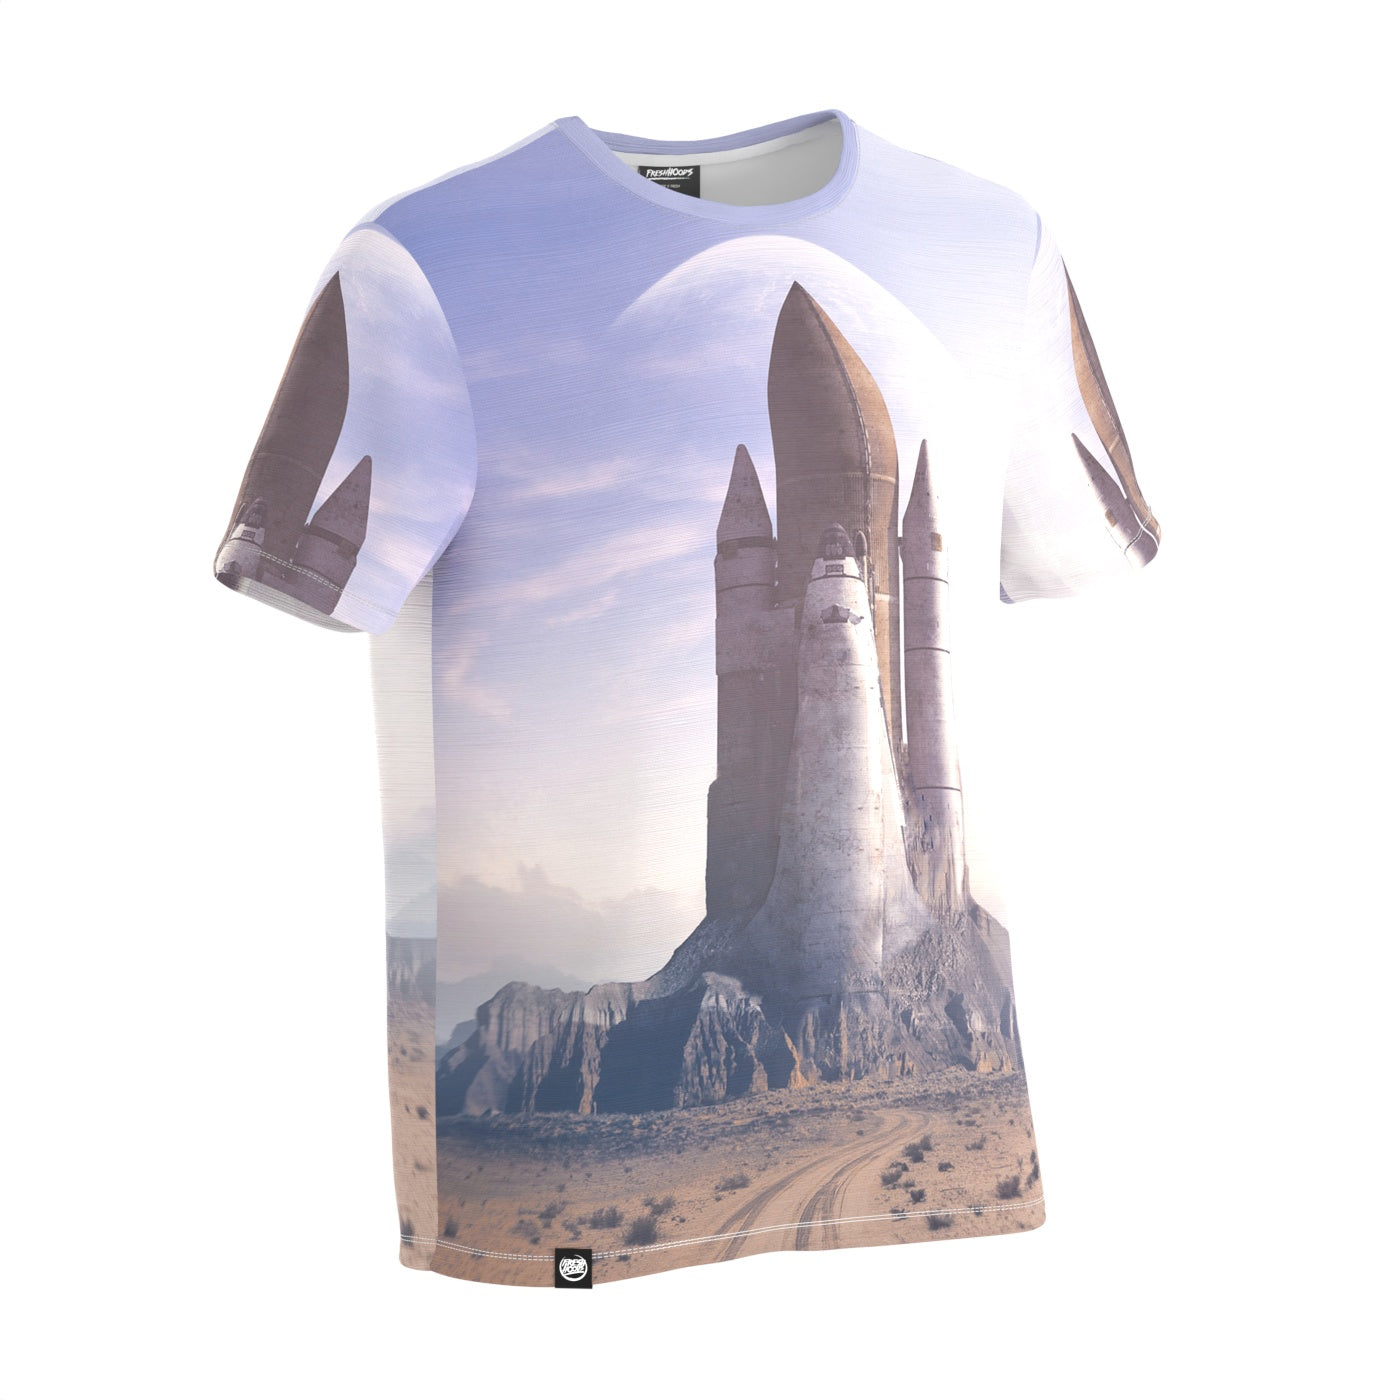 Future T-Shirt